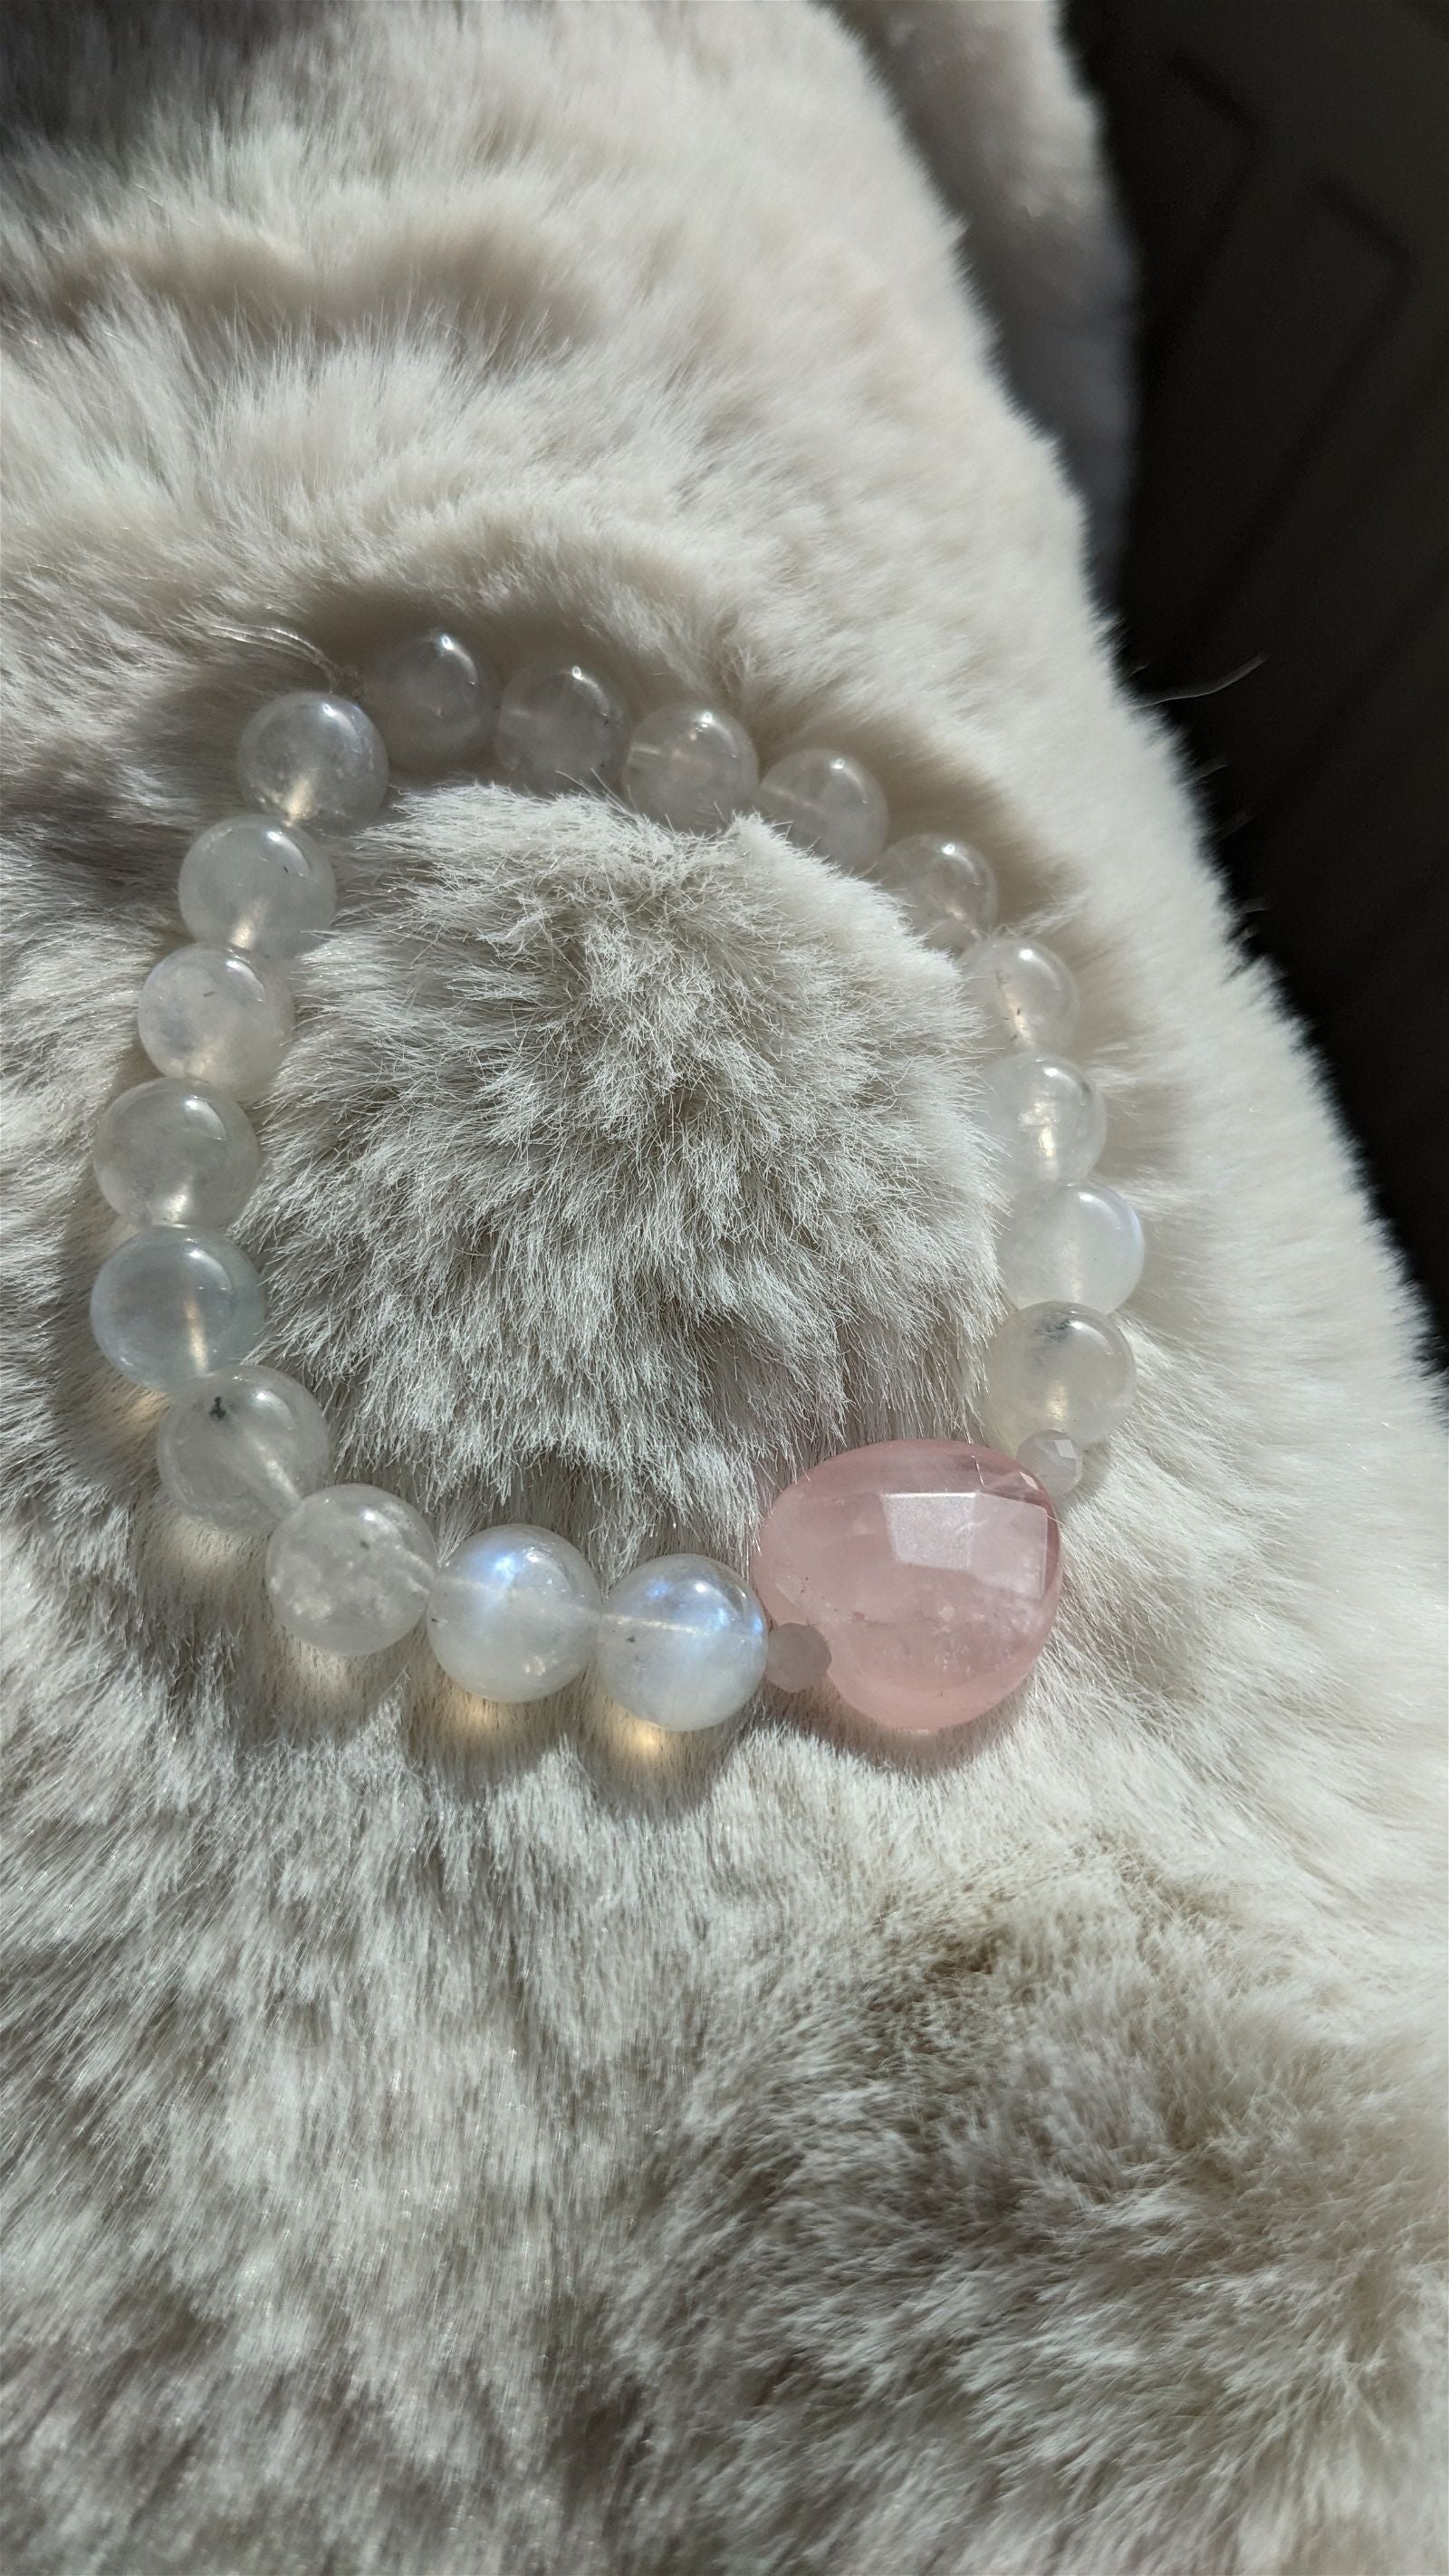 Bracelet labradorite blanche quartz rose - Aurore Lune 